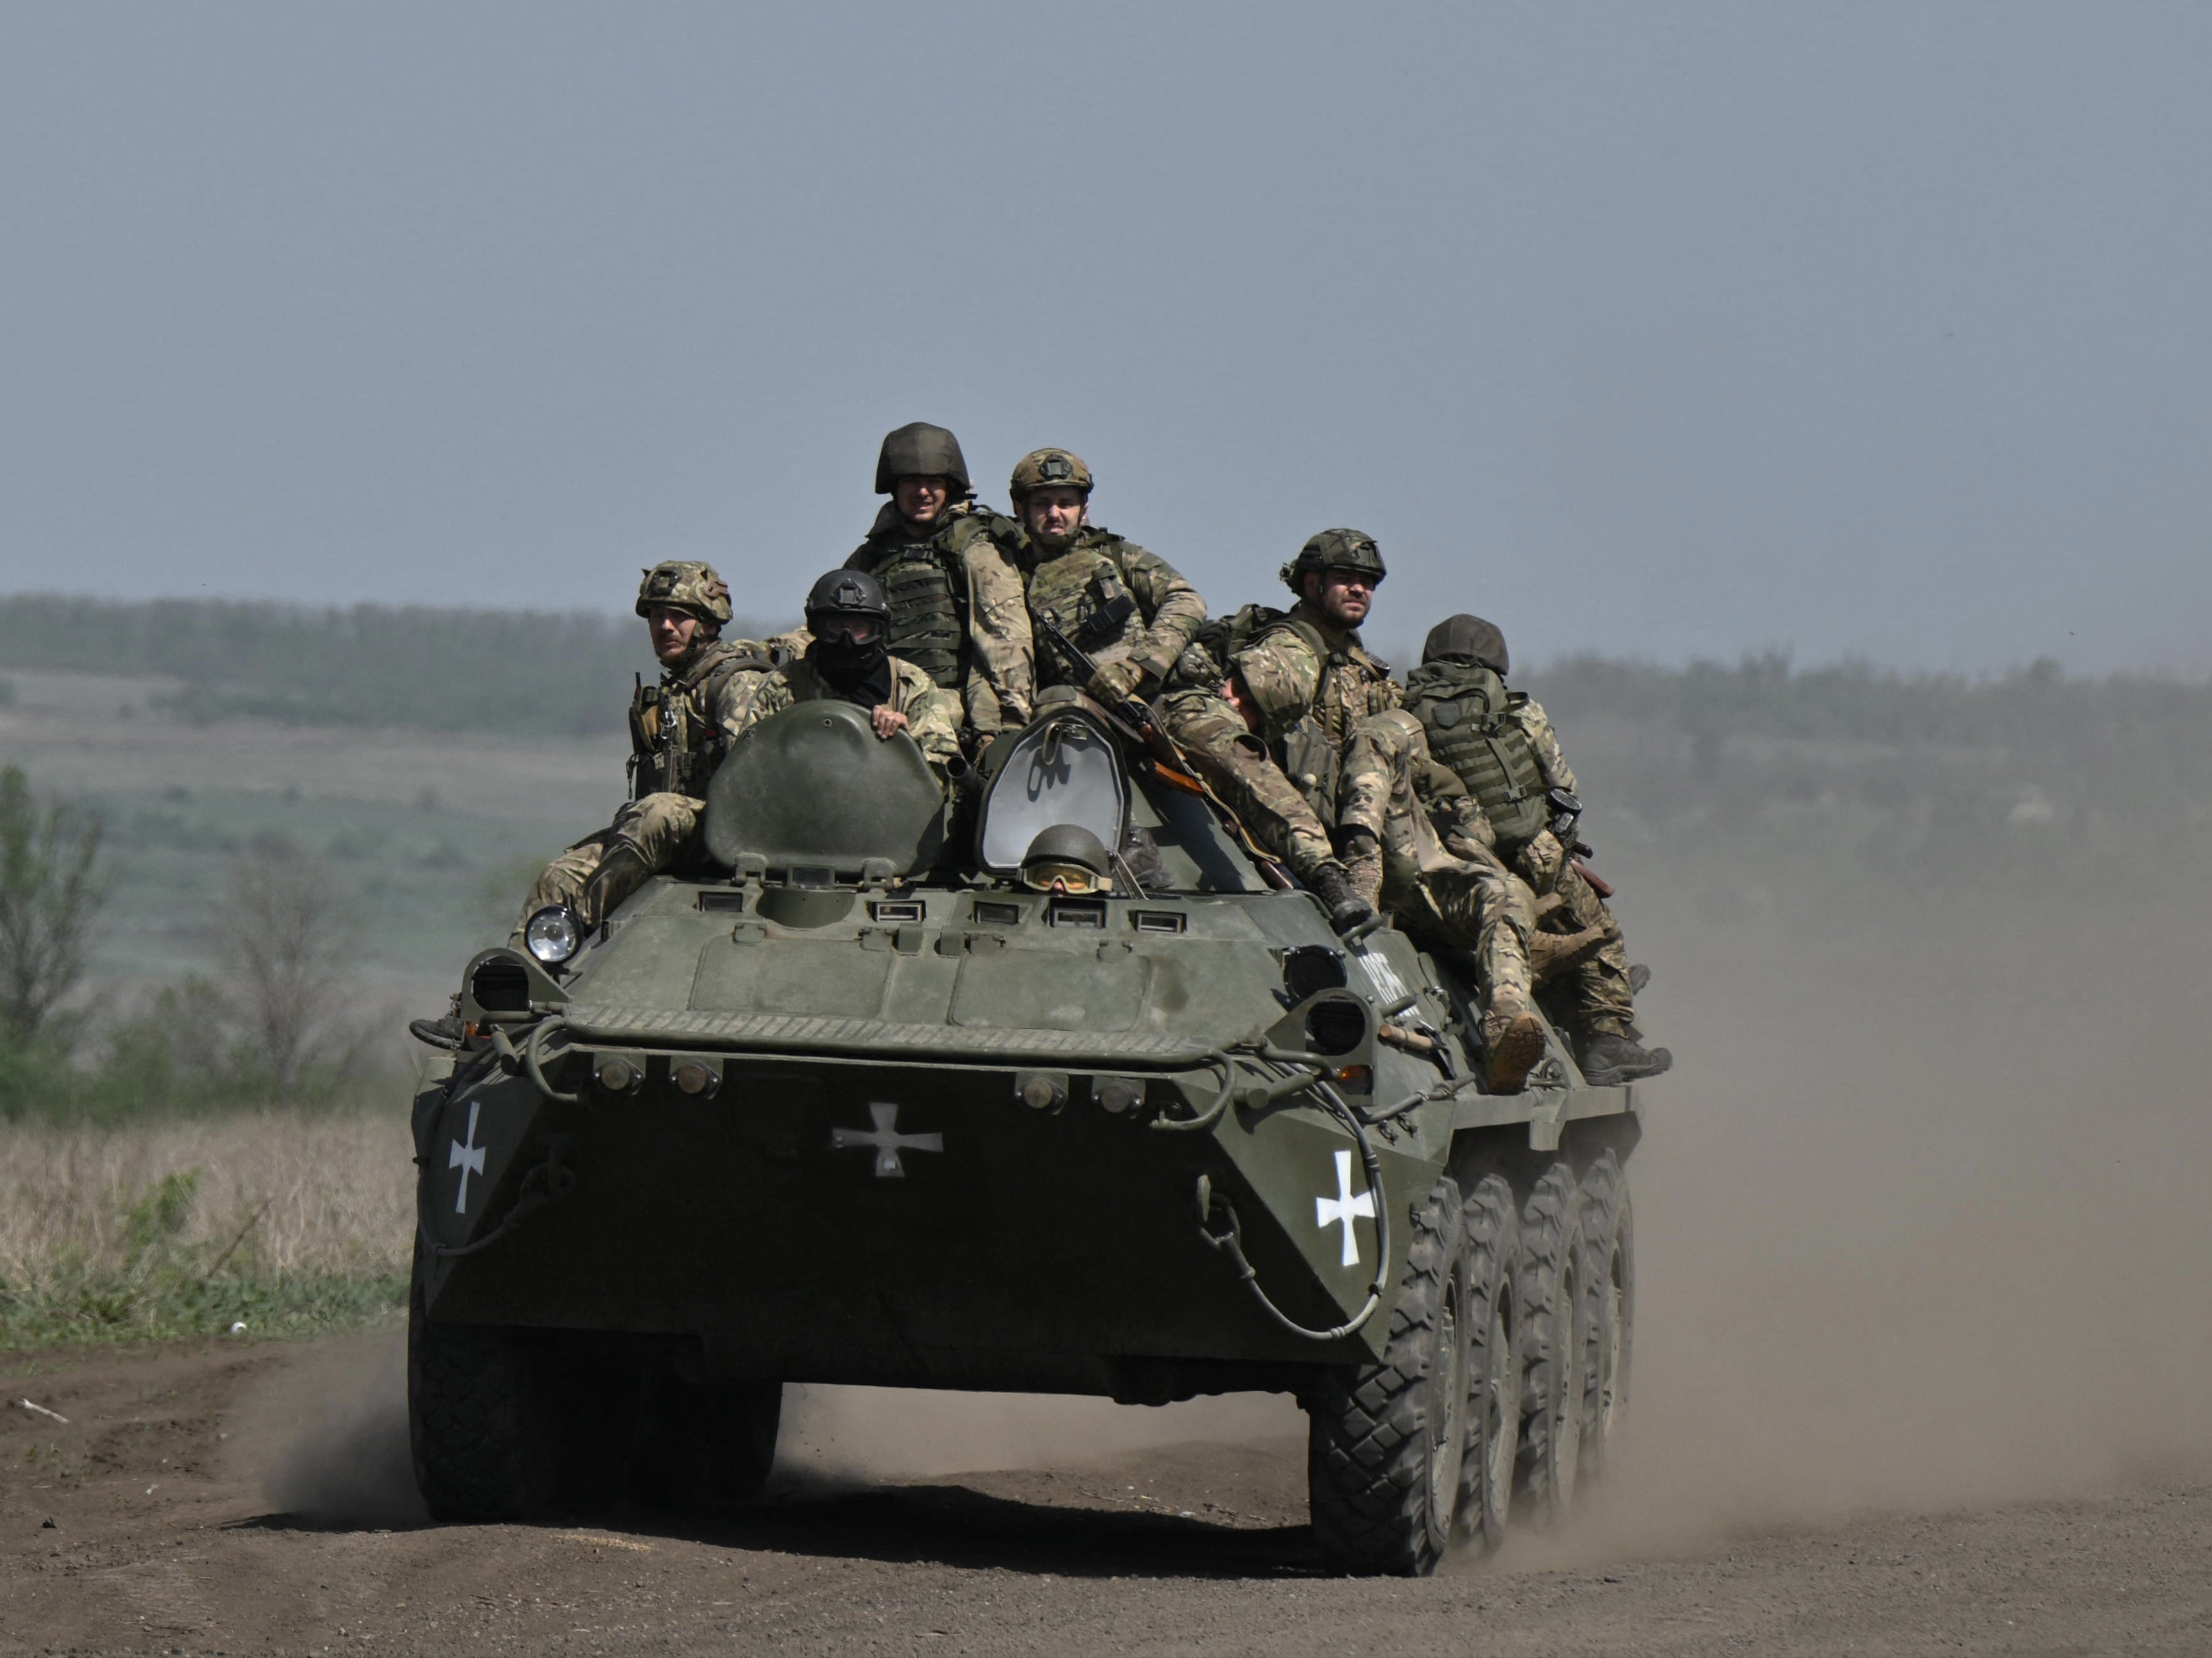 Ukrainian servicemen ride on an armored personnel carrier (APC) in a field near Chasiv Yar, Donetsk region